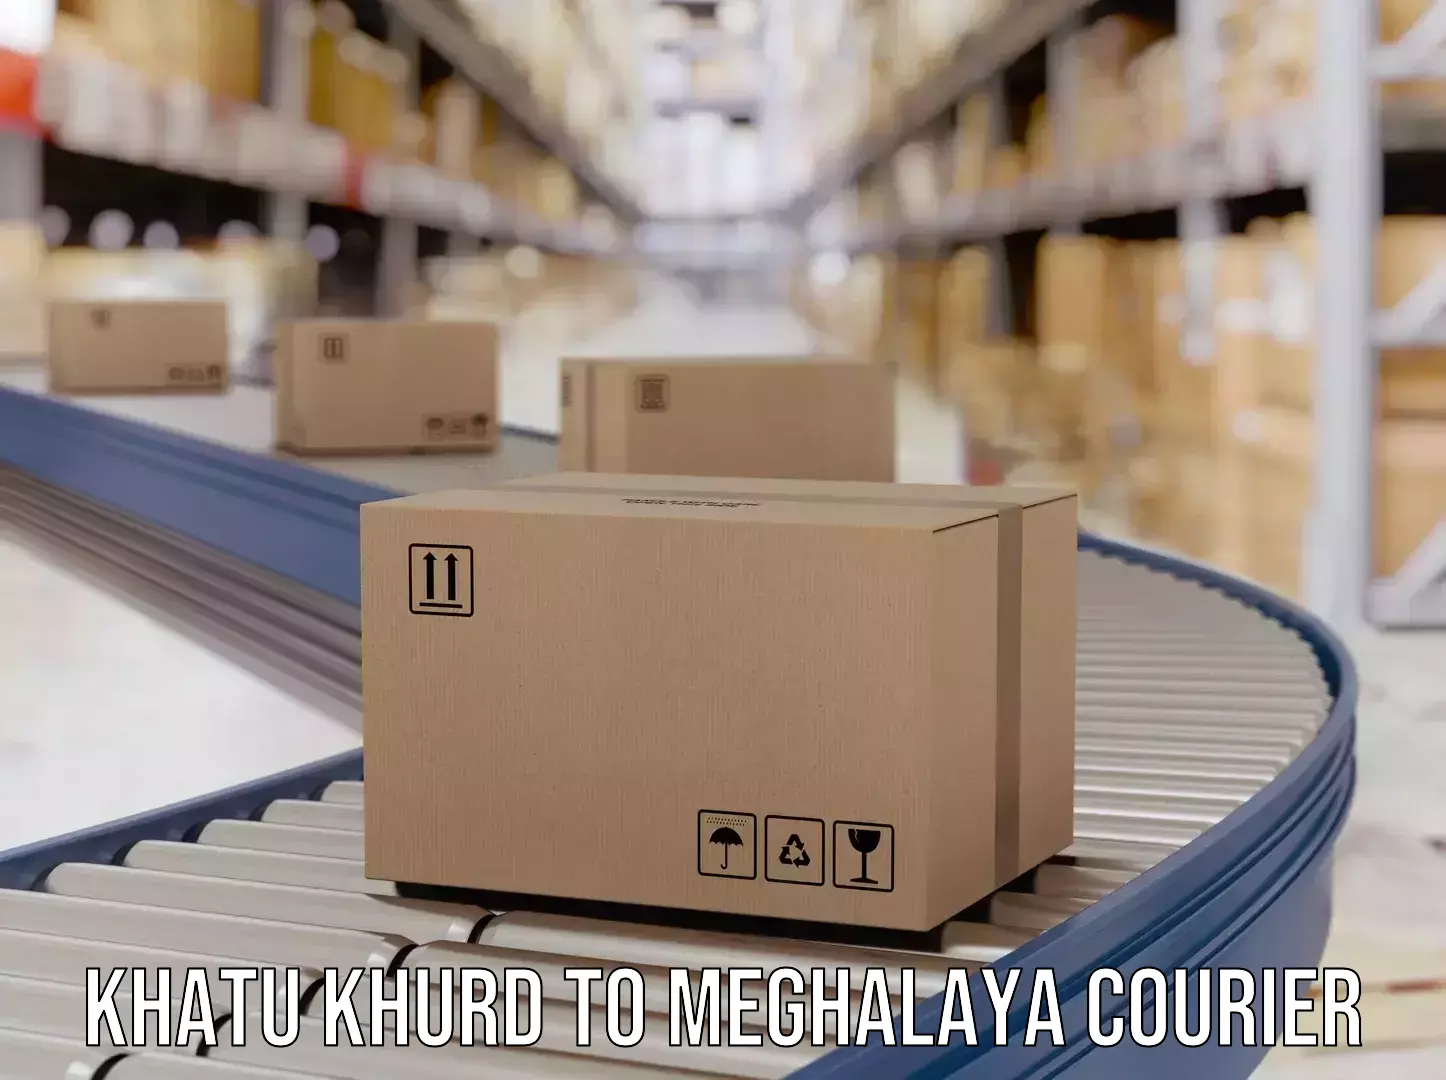 Next-day delivery options Khatu Khurd to Dkhiah West